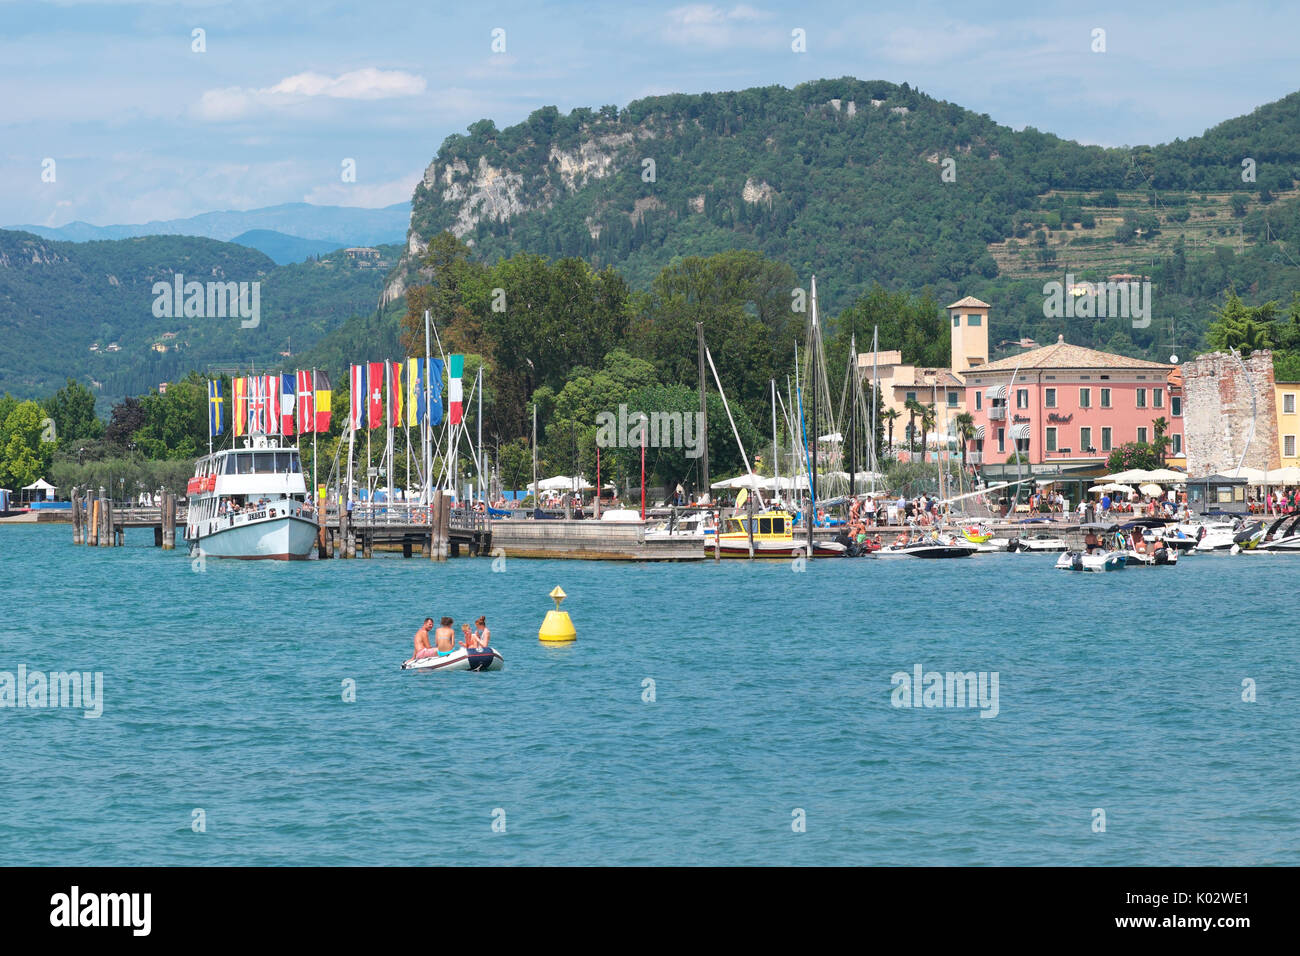 Bardolino town, Lake Garda, Italy ferry boat waiting to depart Stock Photo